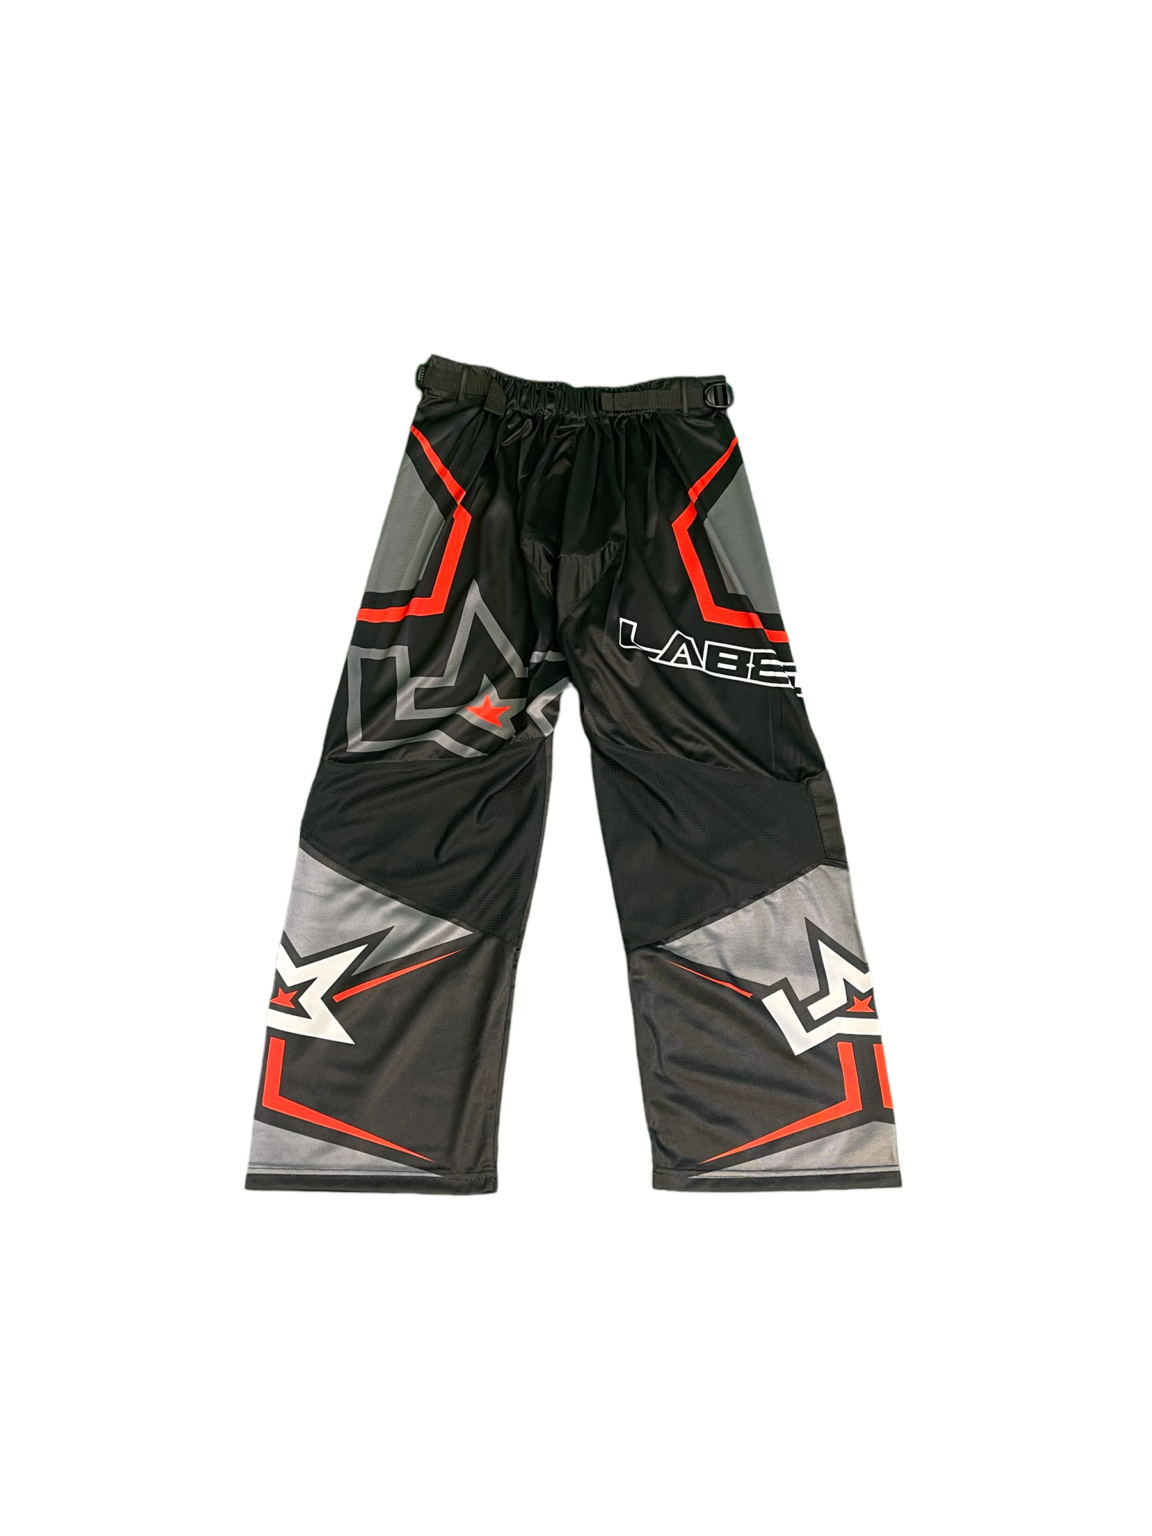 Labeda Hockey Pant Pama 7.1 SR - Black/Charcoal/Red